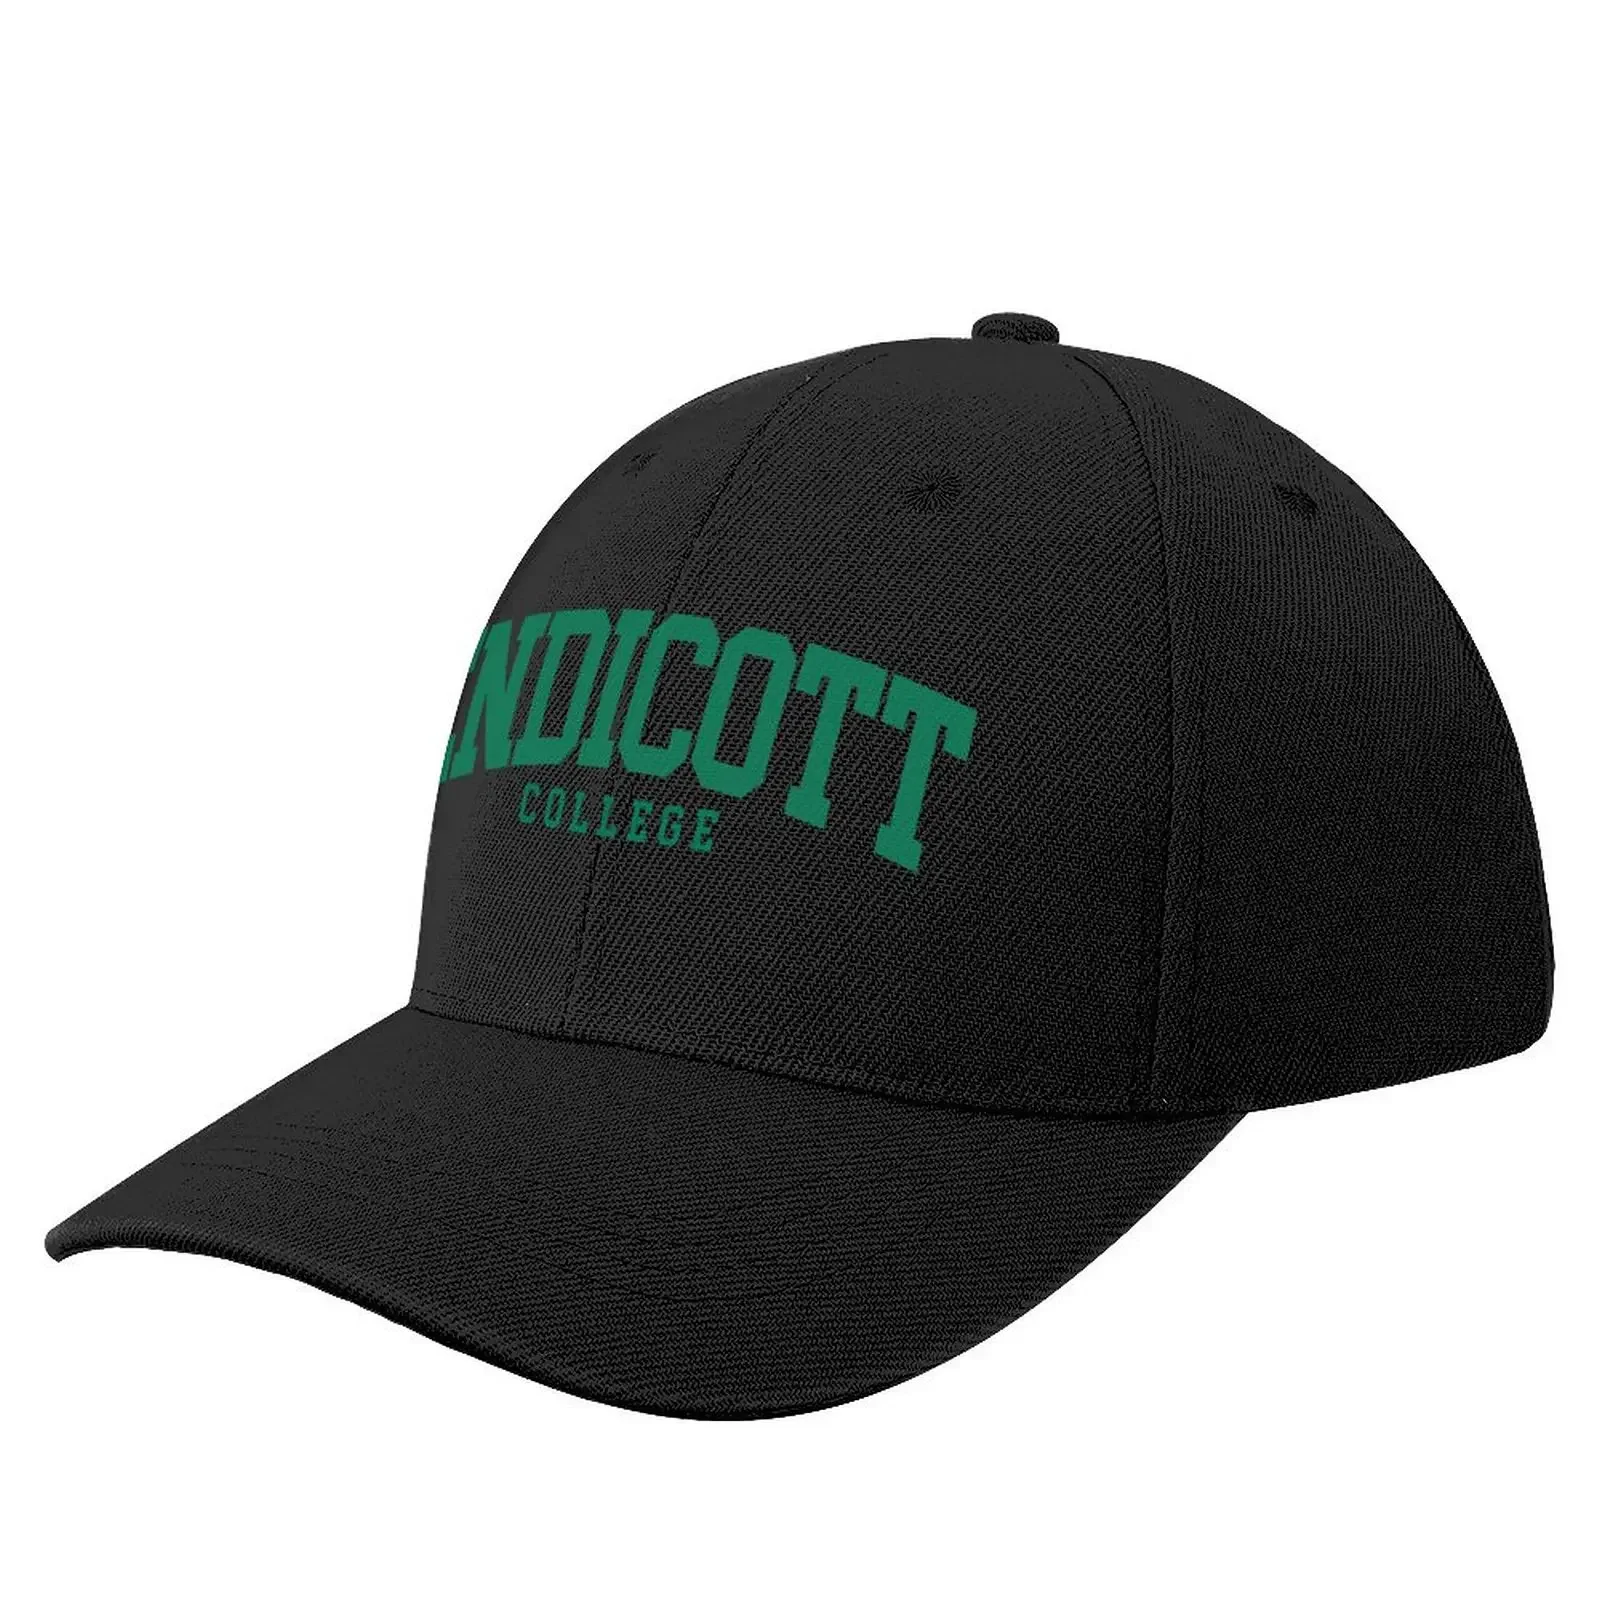 

endicott - college font curved Baseball Cap Bobble Hat New Hat Women's Golf Wear Men's